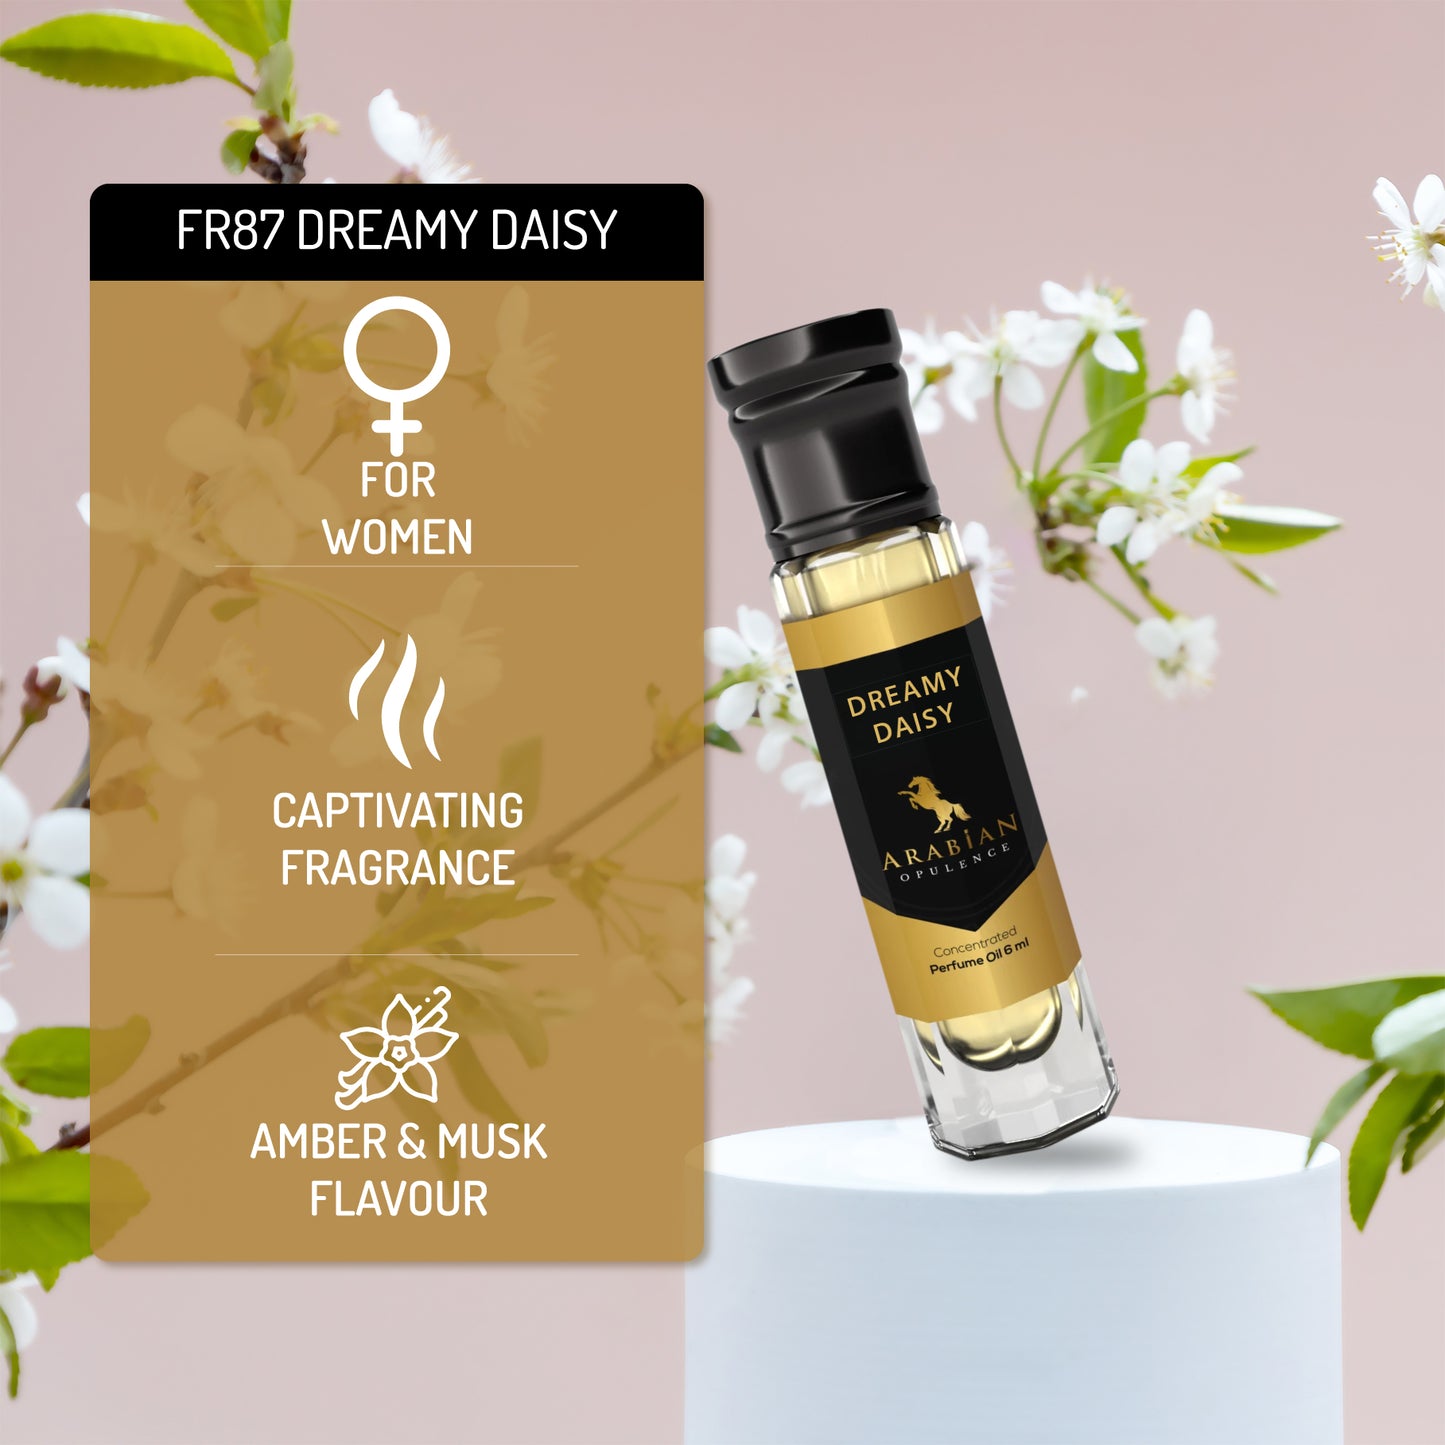 FR87 DREAMY DAISY W - Perfume Body Oil - Alcohol Free